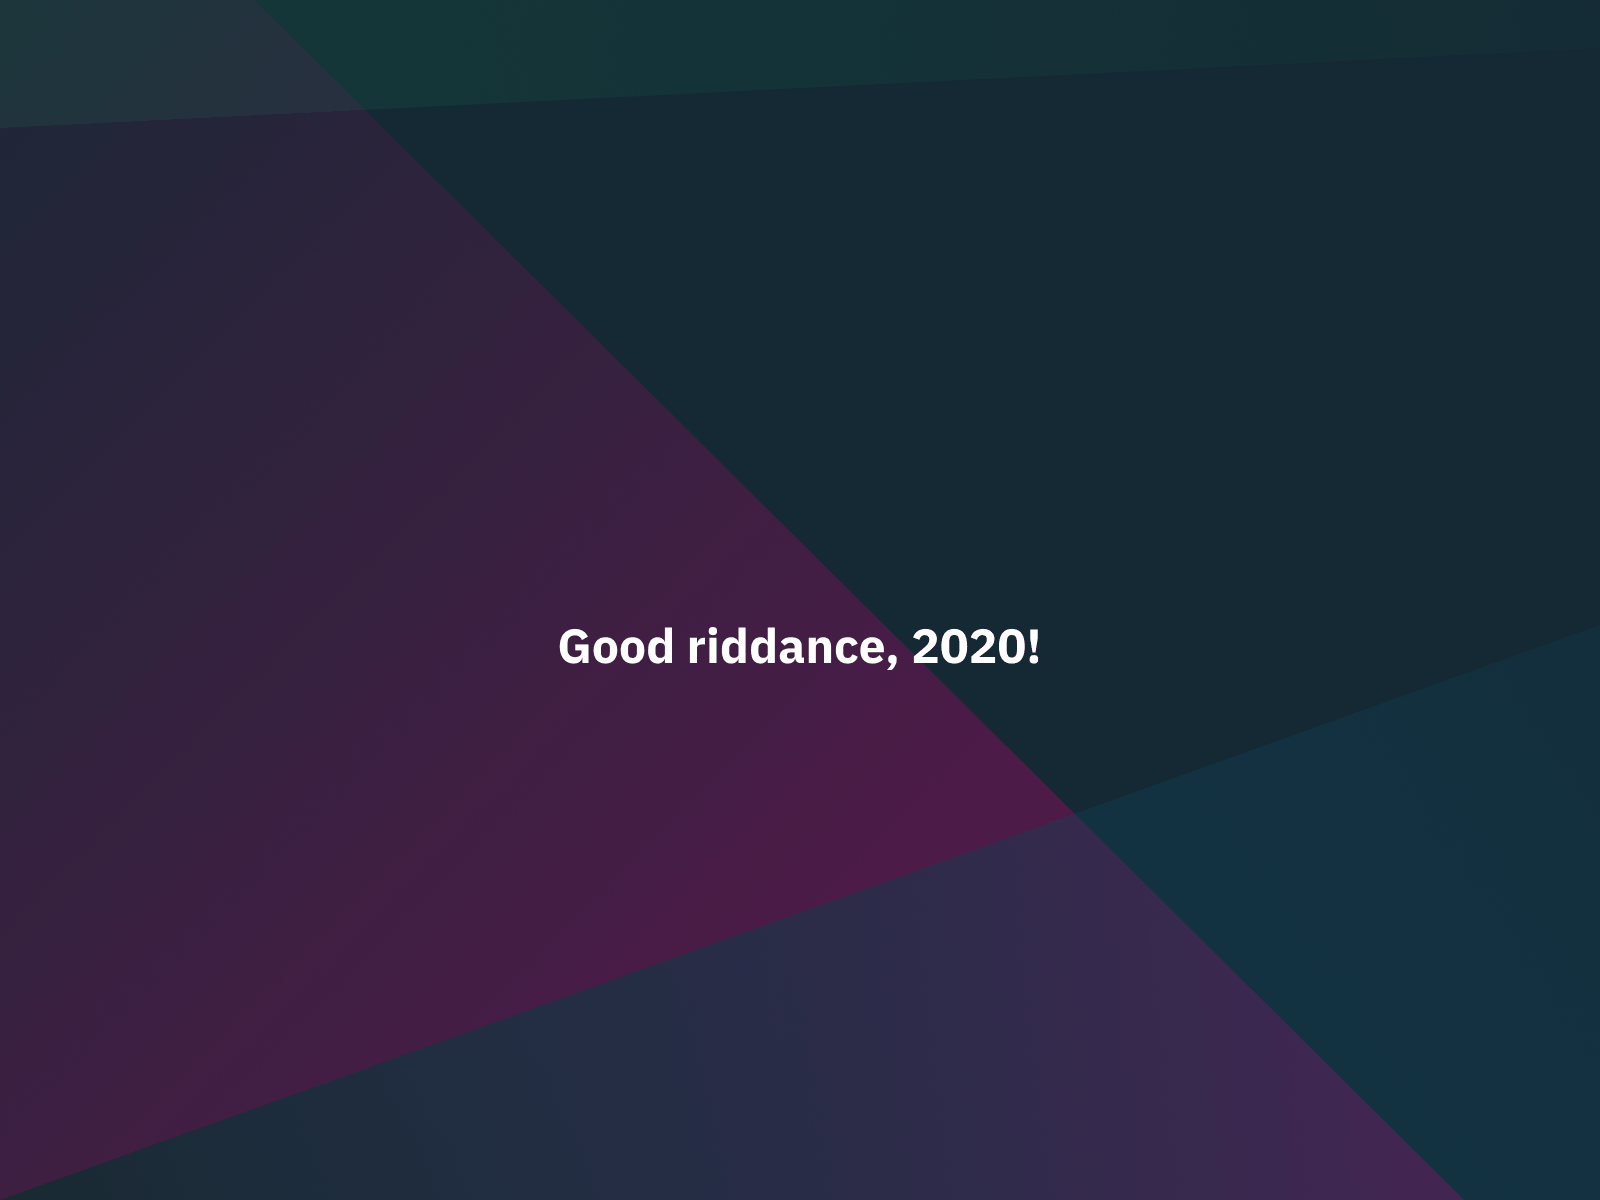 Good Riddance 2020 2020 2021 happy new year holidays new year